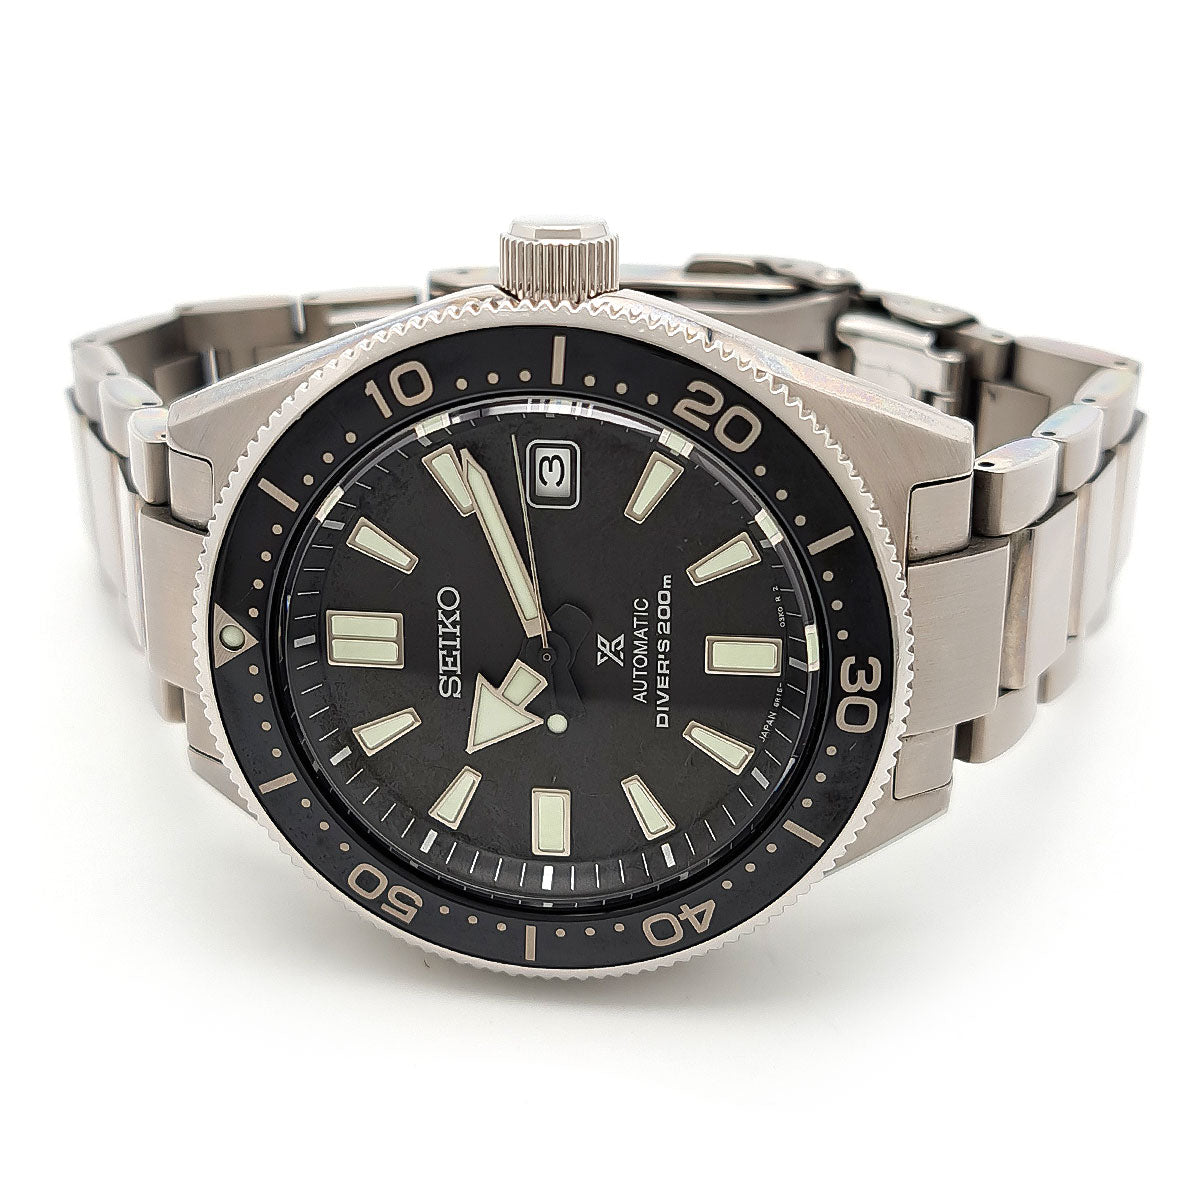 Seiko "Prospex Diver Scuba SBDC051" Men's Automatic Wristwatch in Stainless Steel SBDC051